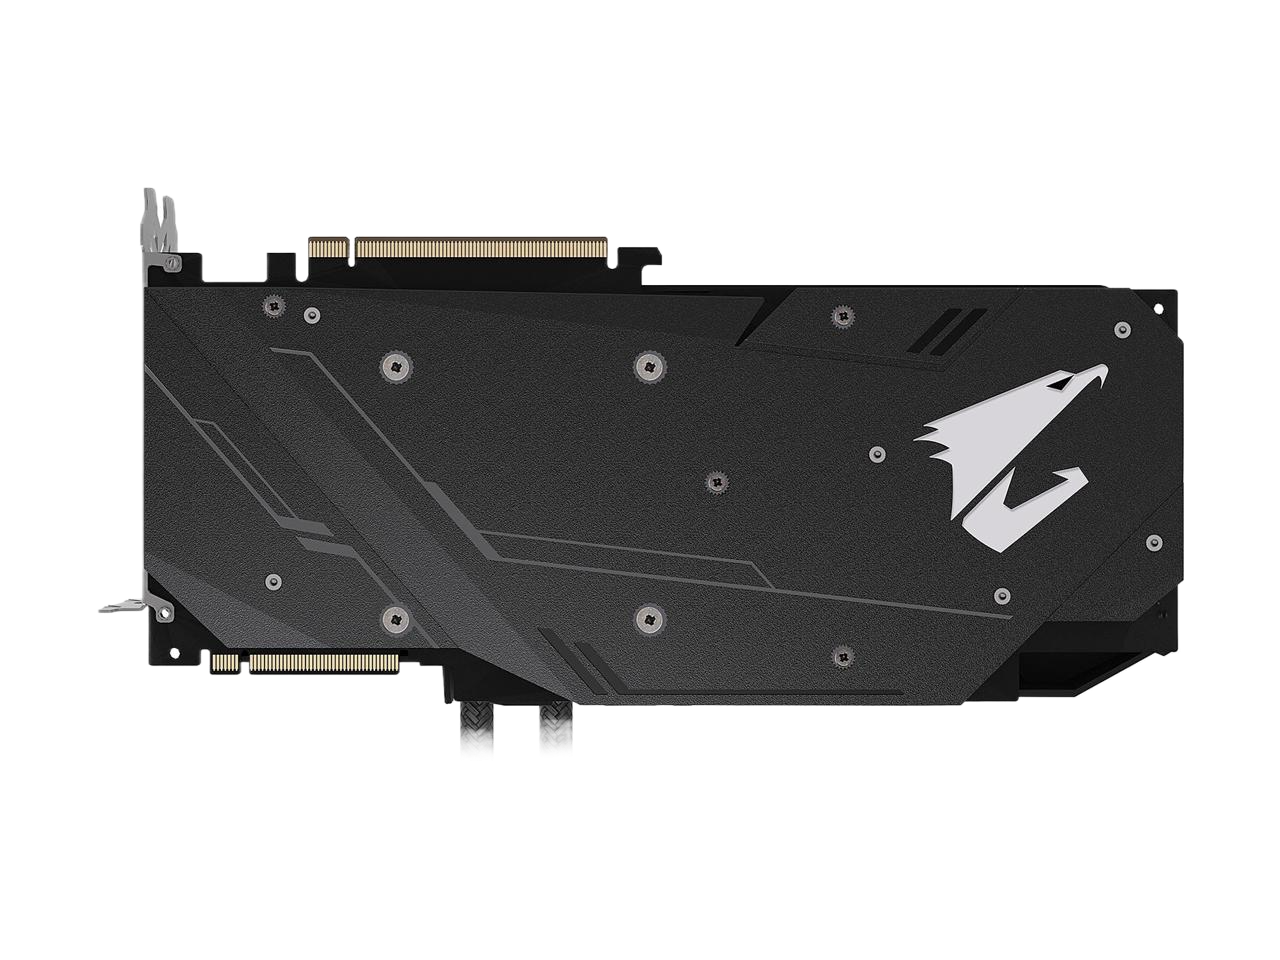 GIGABYTE GeForce RTX 2080 AORUS XTREME WATERFORCE 8GB 256-Bit GDDR6 Video Card GV-N2080AORUSX W-8GC